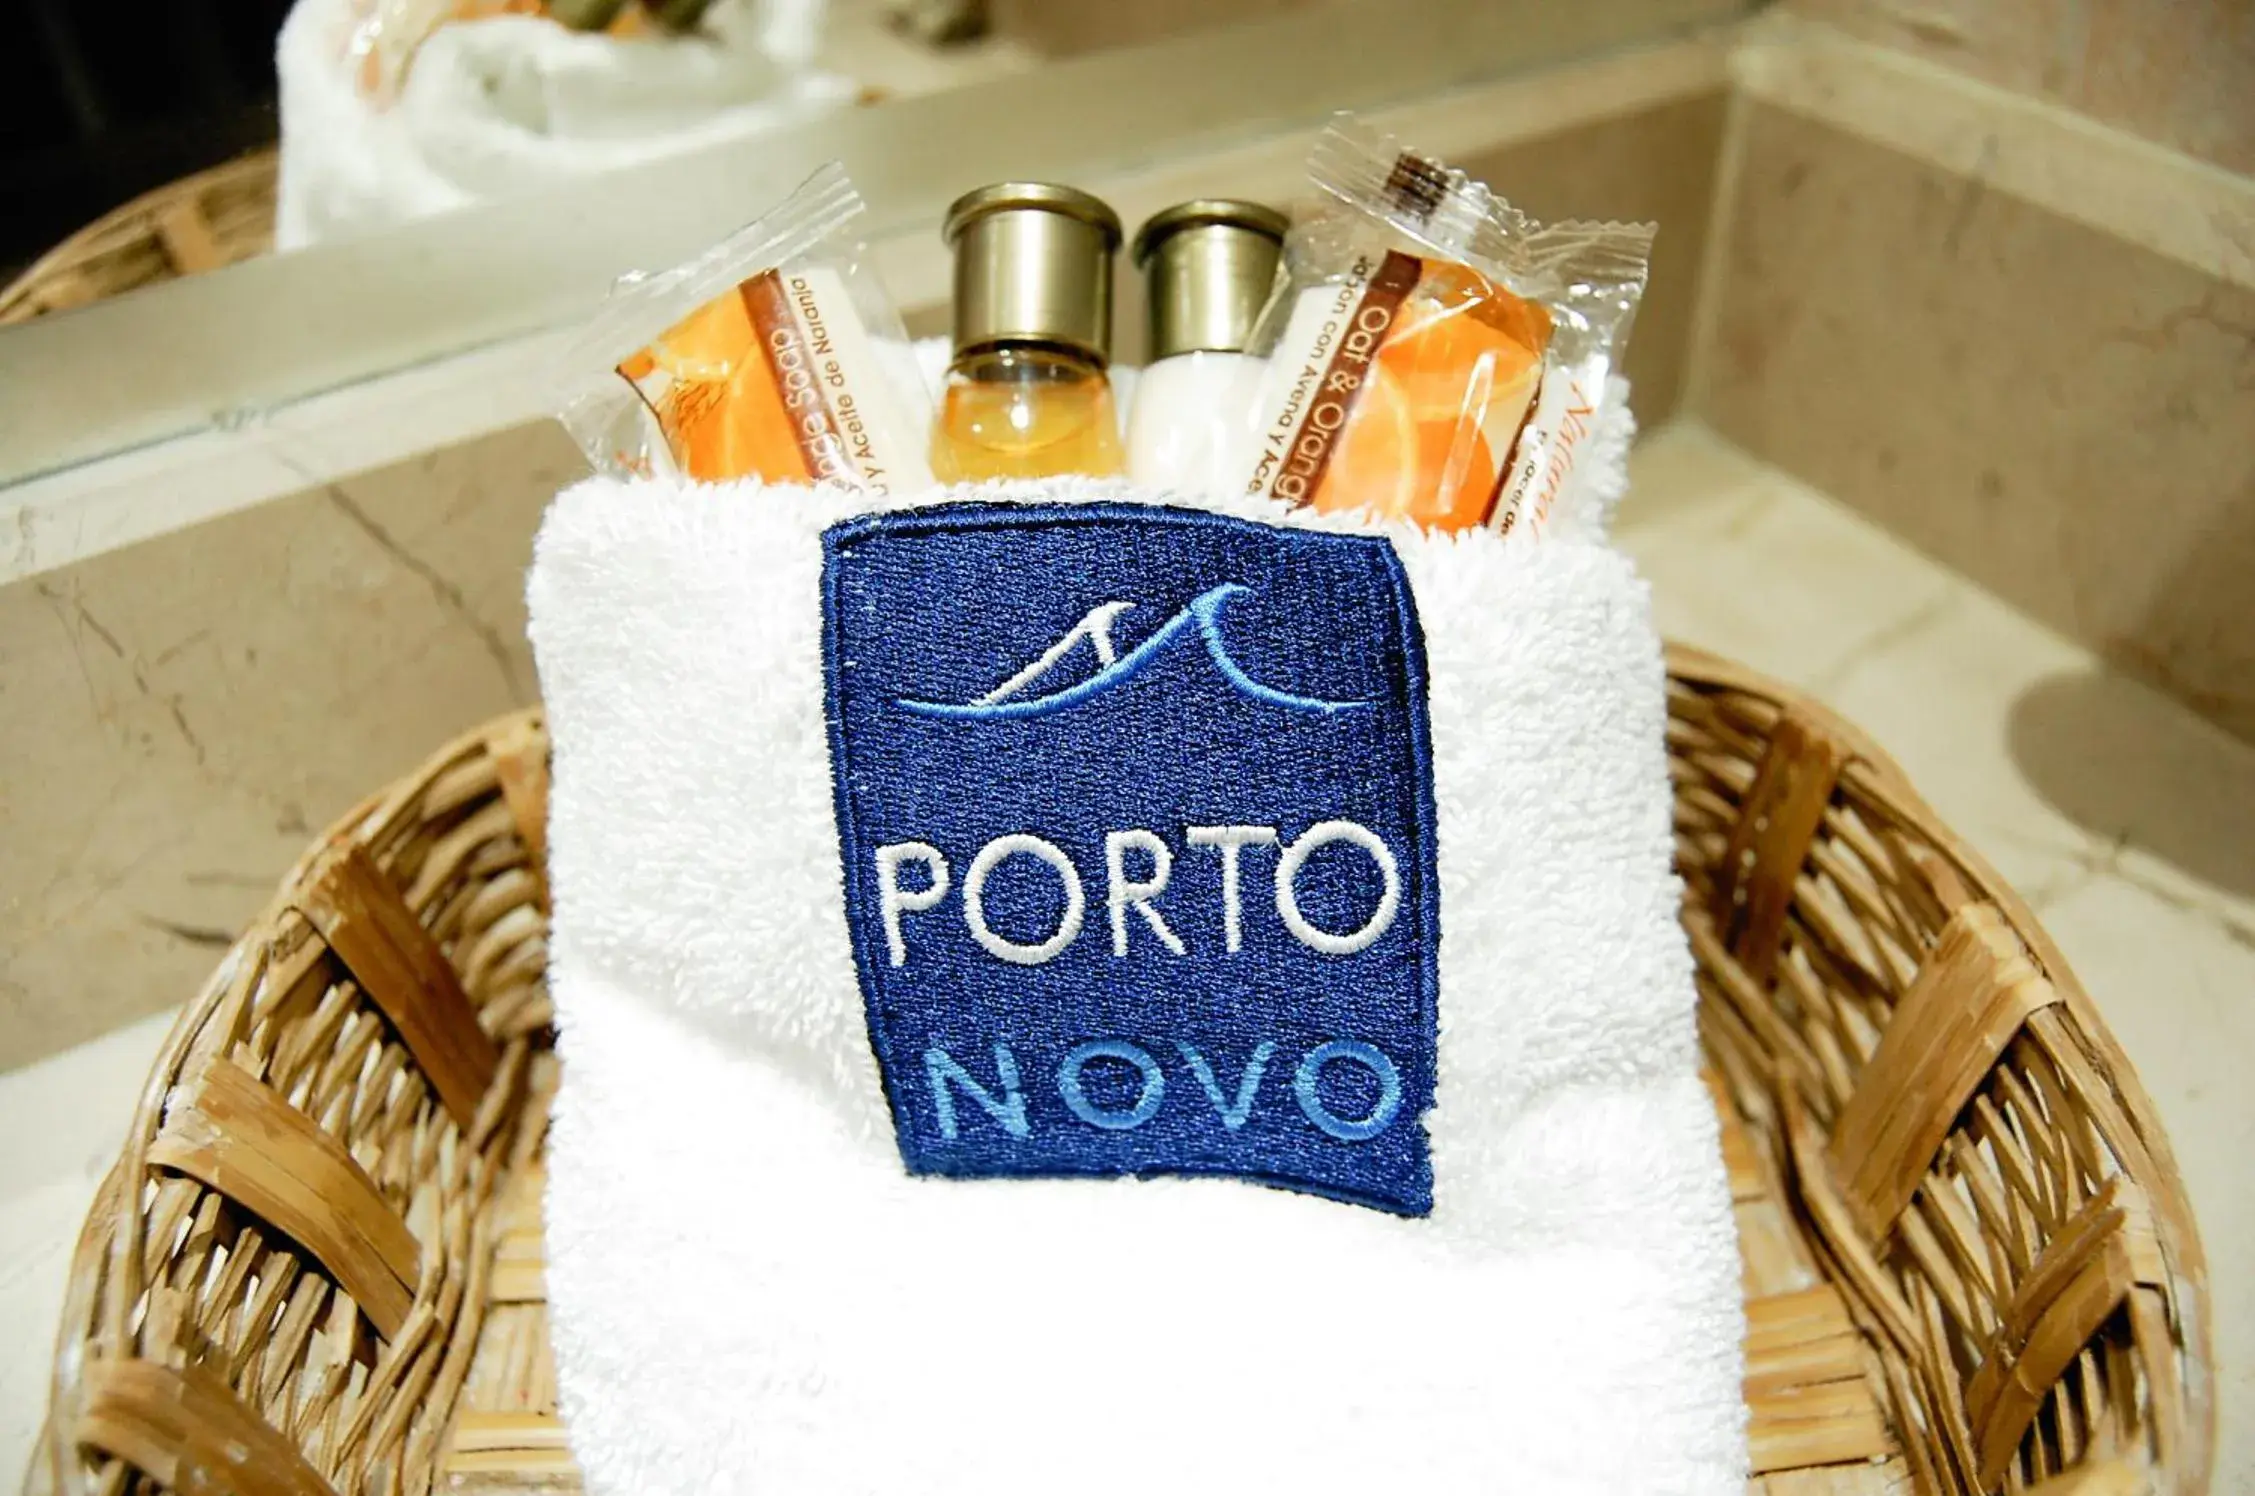 Text overlay in Hotel Porto Novo